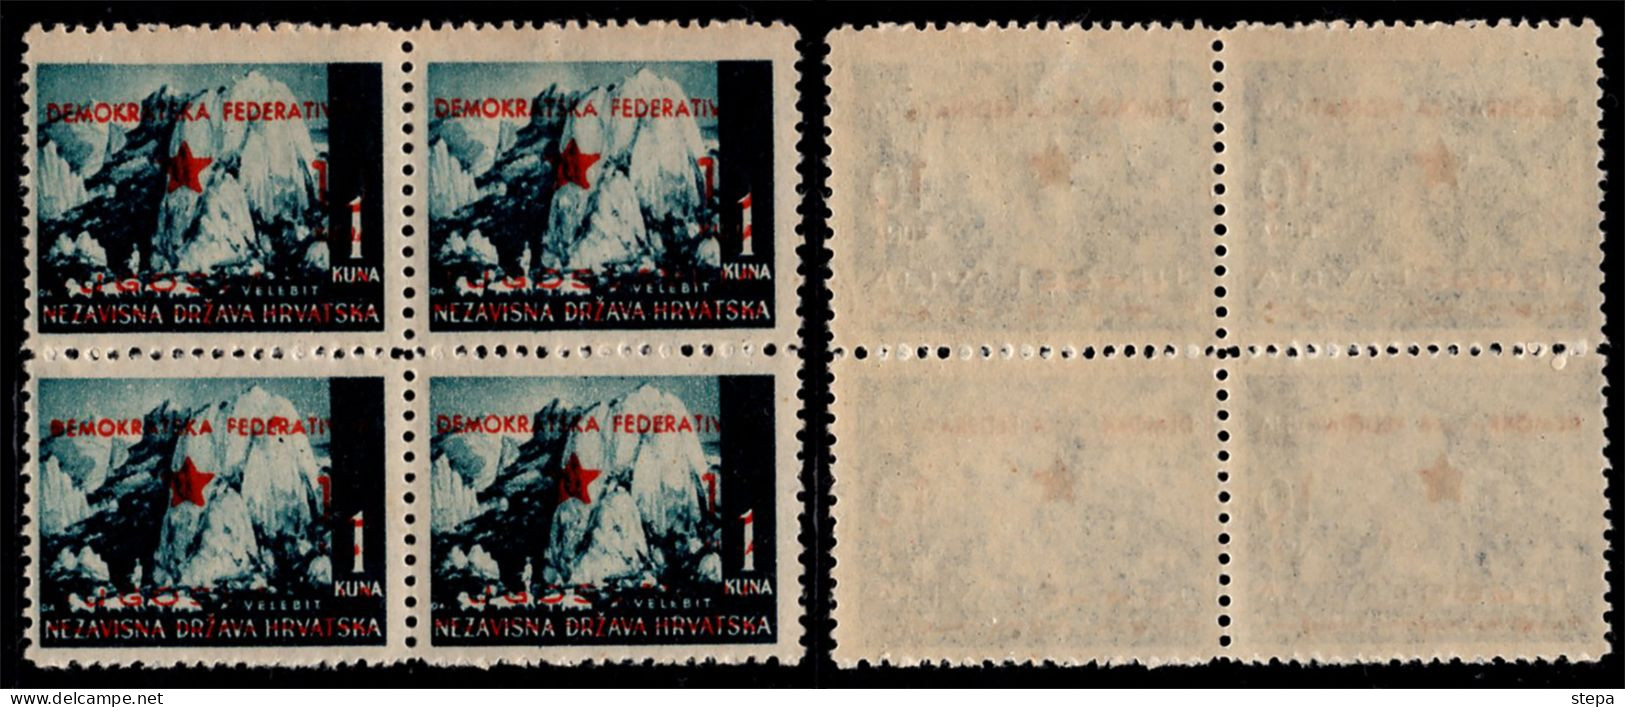 YUGOSLAVIA-CROATIA, PROVISIONAL ISSUE FOR SPLIT, 10/1 KUNA "LANDSCAPES" POROUS PAPER BLOCK OF FOUR, MNH 1945 RARE!!!! - Croatie